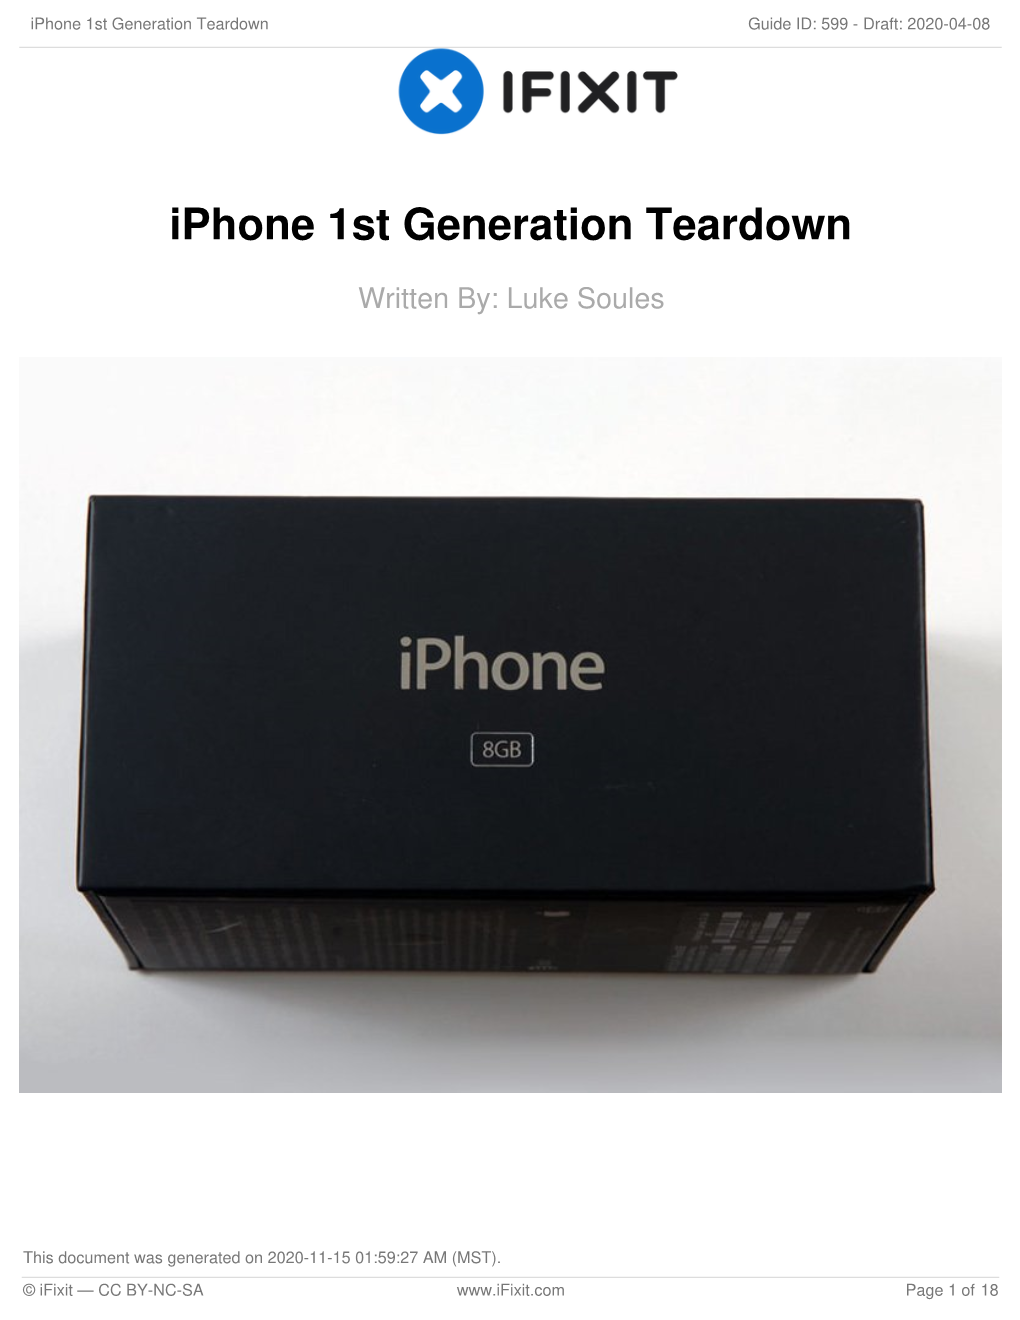 Iphone 1St Generation Teardown Guide ID: 599 - Draft: 2020-04-08